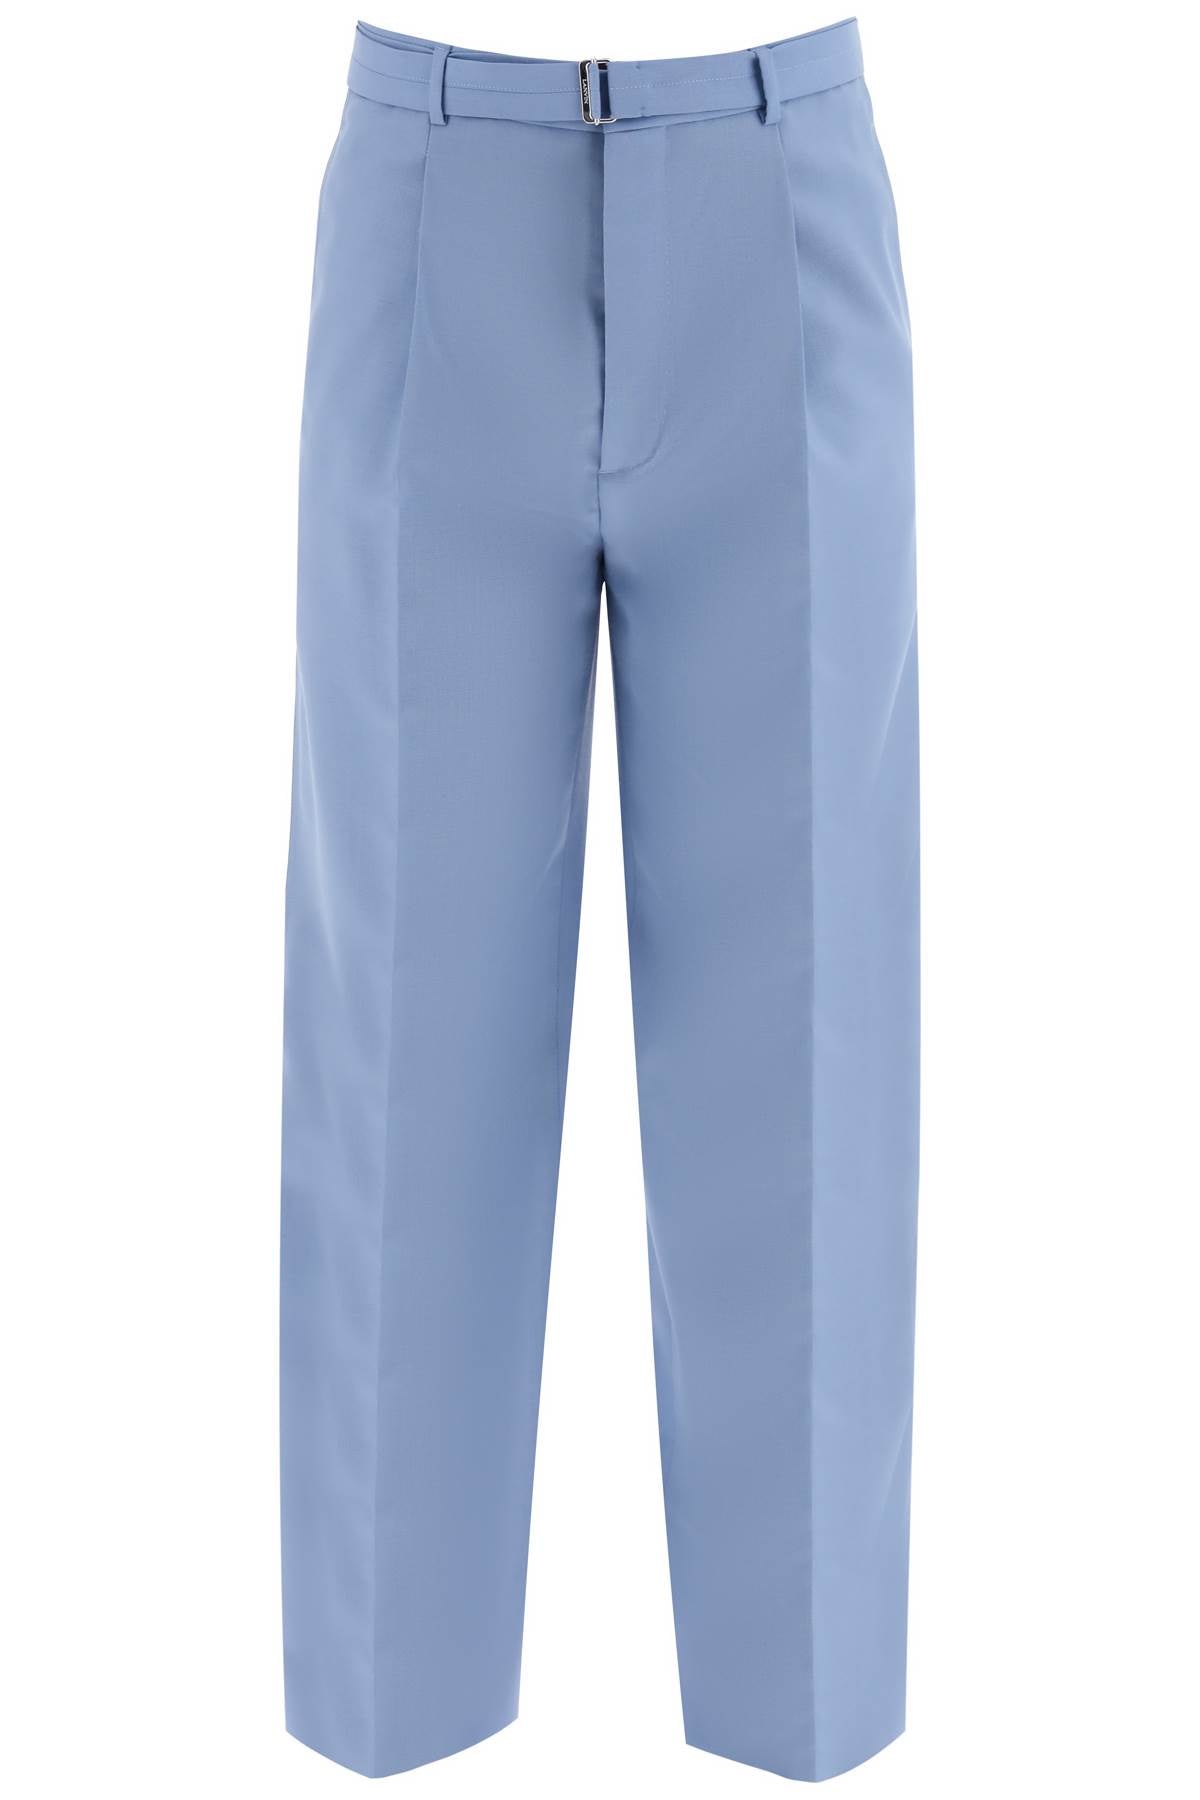 Lanvin tailored wide-leg trousers-0